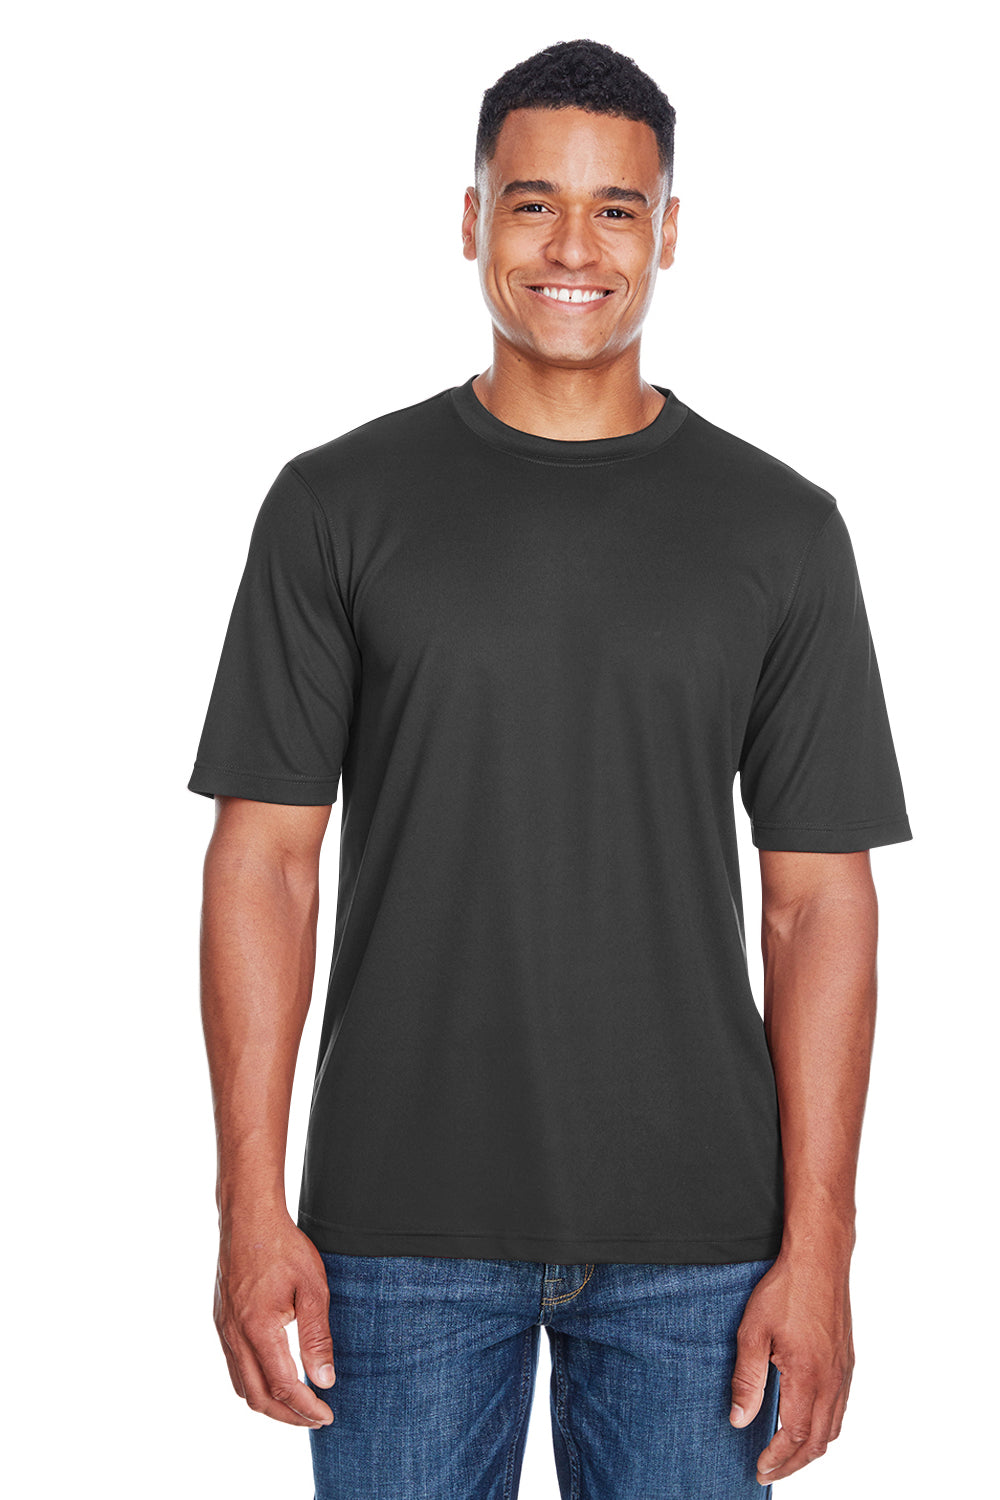 Core 365 88182 Mens Pace Performance Moisture Wicking Short Sleeve Crewneck T-Shirt Carbon Grey Front